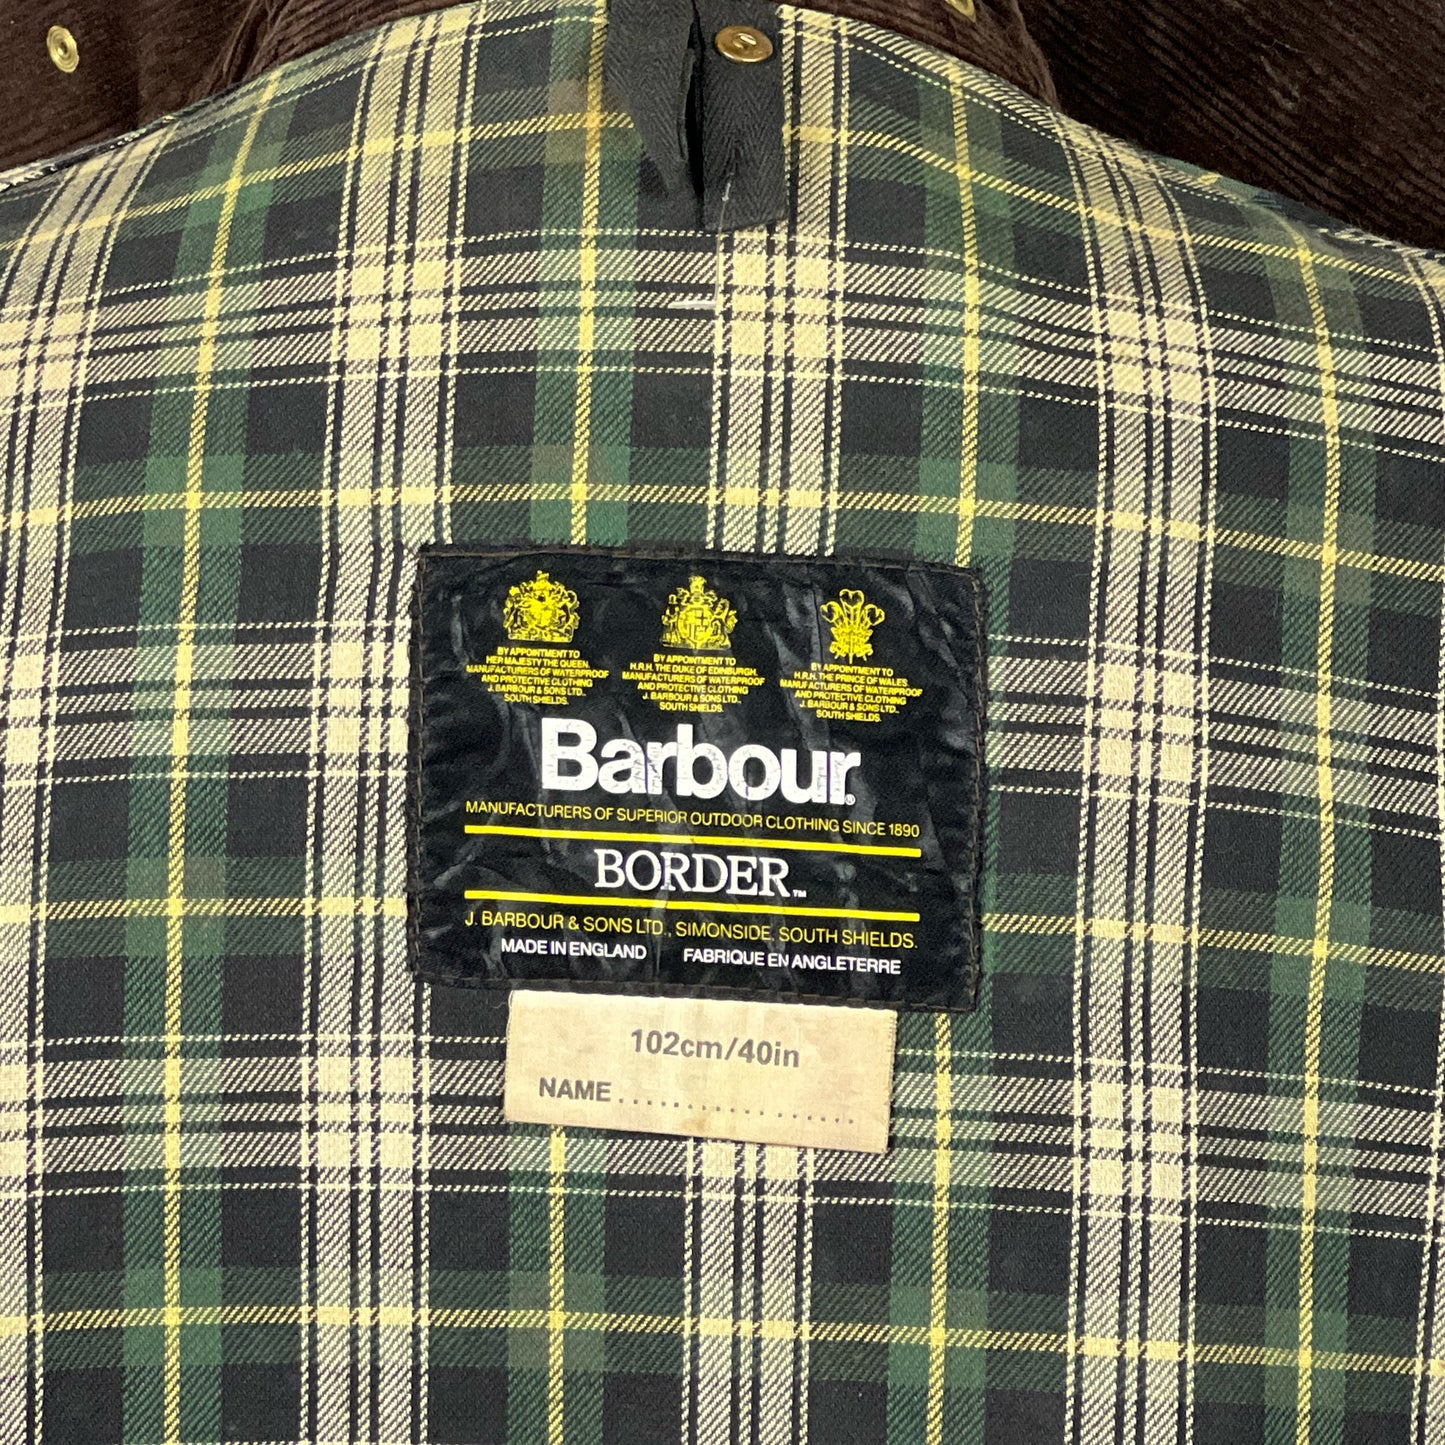 Barbour unisex Border Verde cotone Cerato C40/102cm Green Border Coat Size M